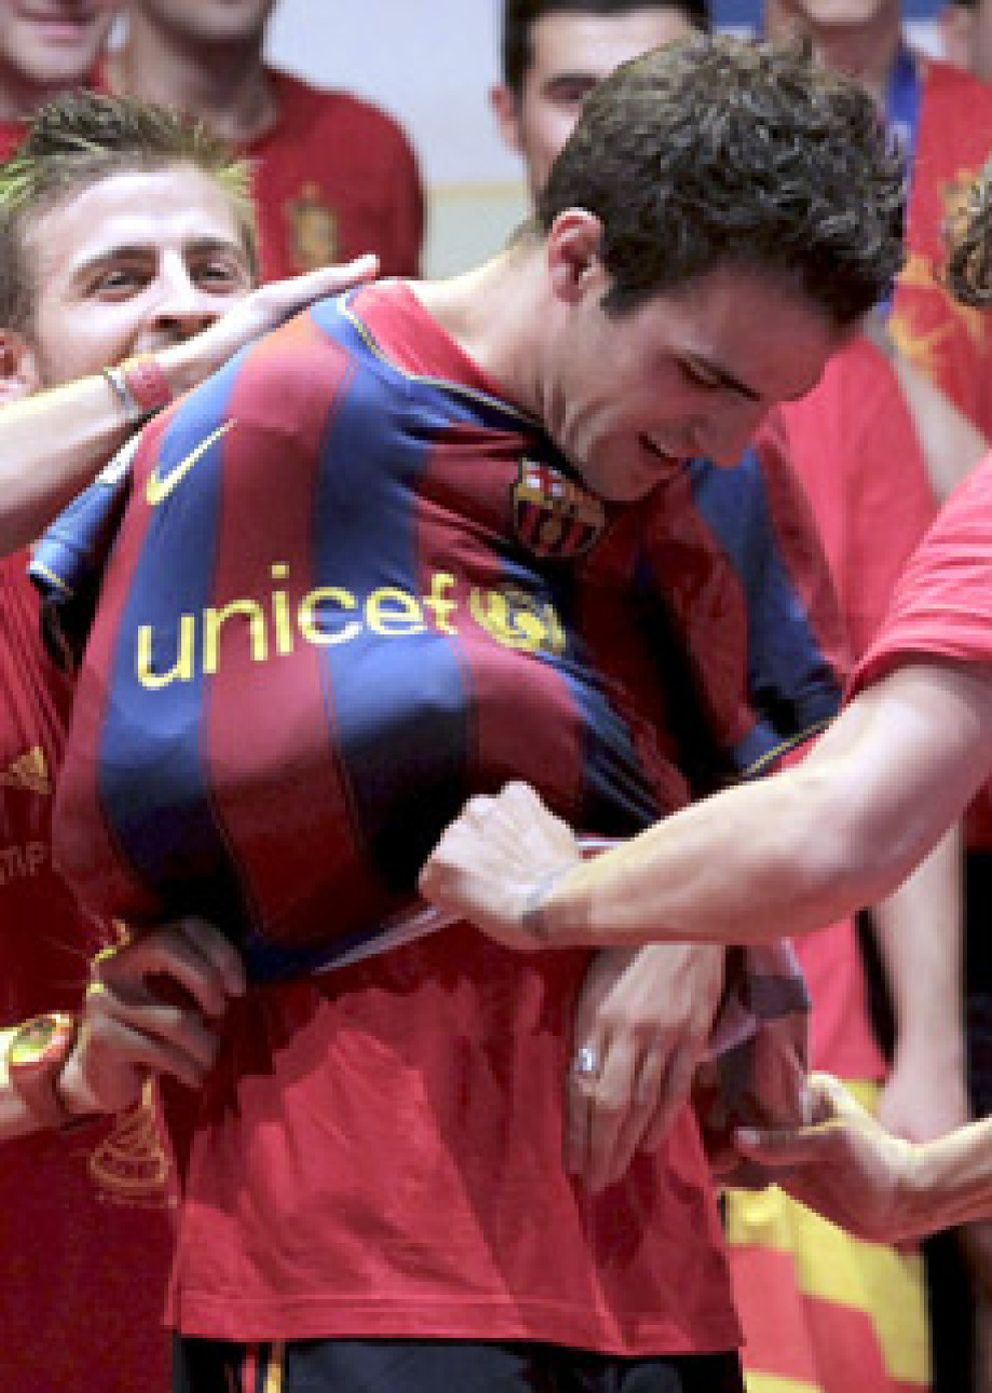 Foto: El Arsenal comunica al Barcelona que Cesc "es intransferible"